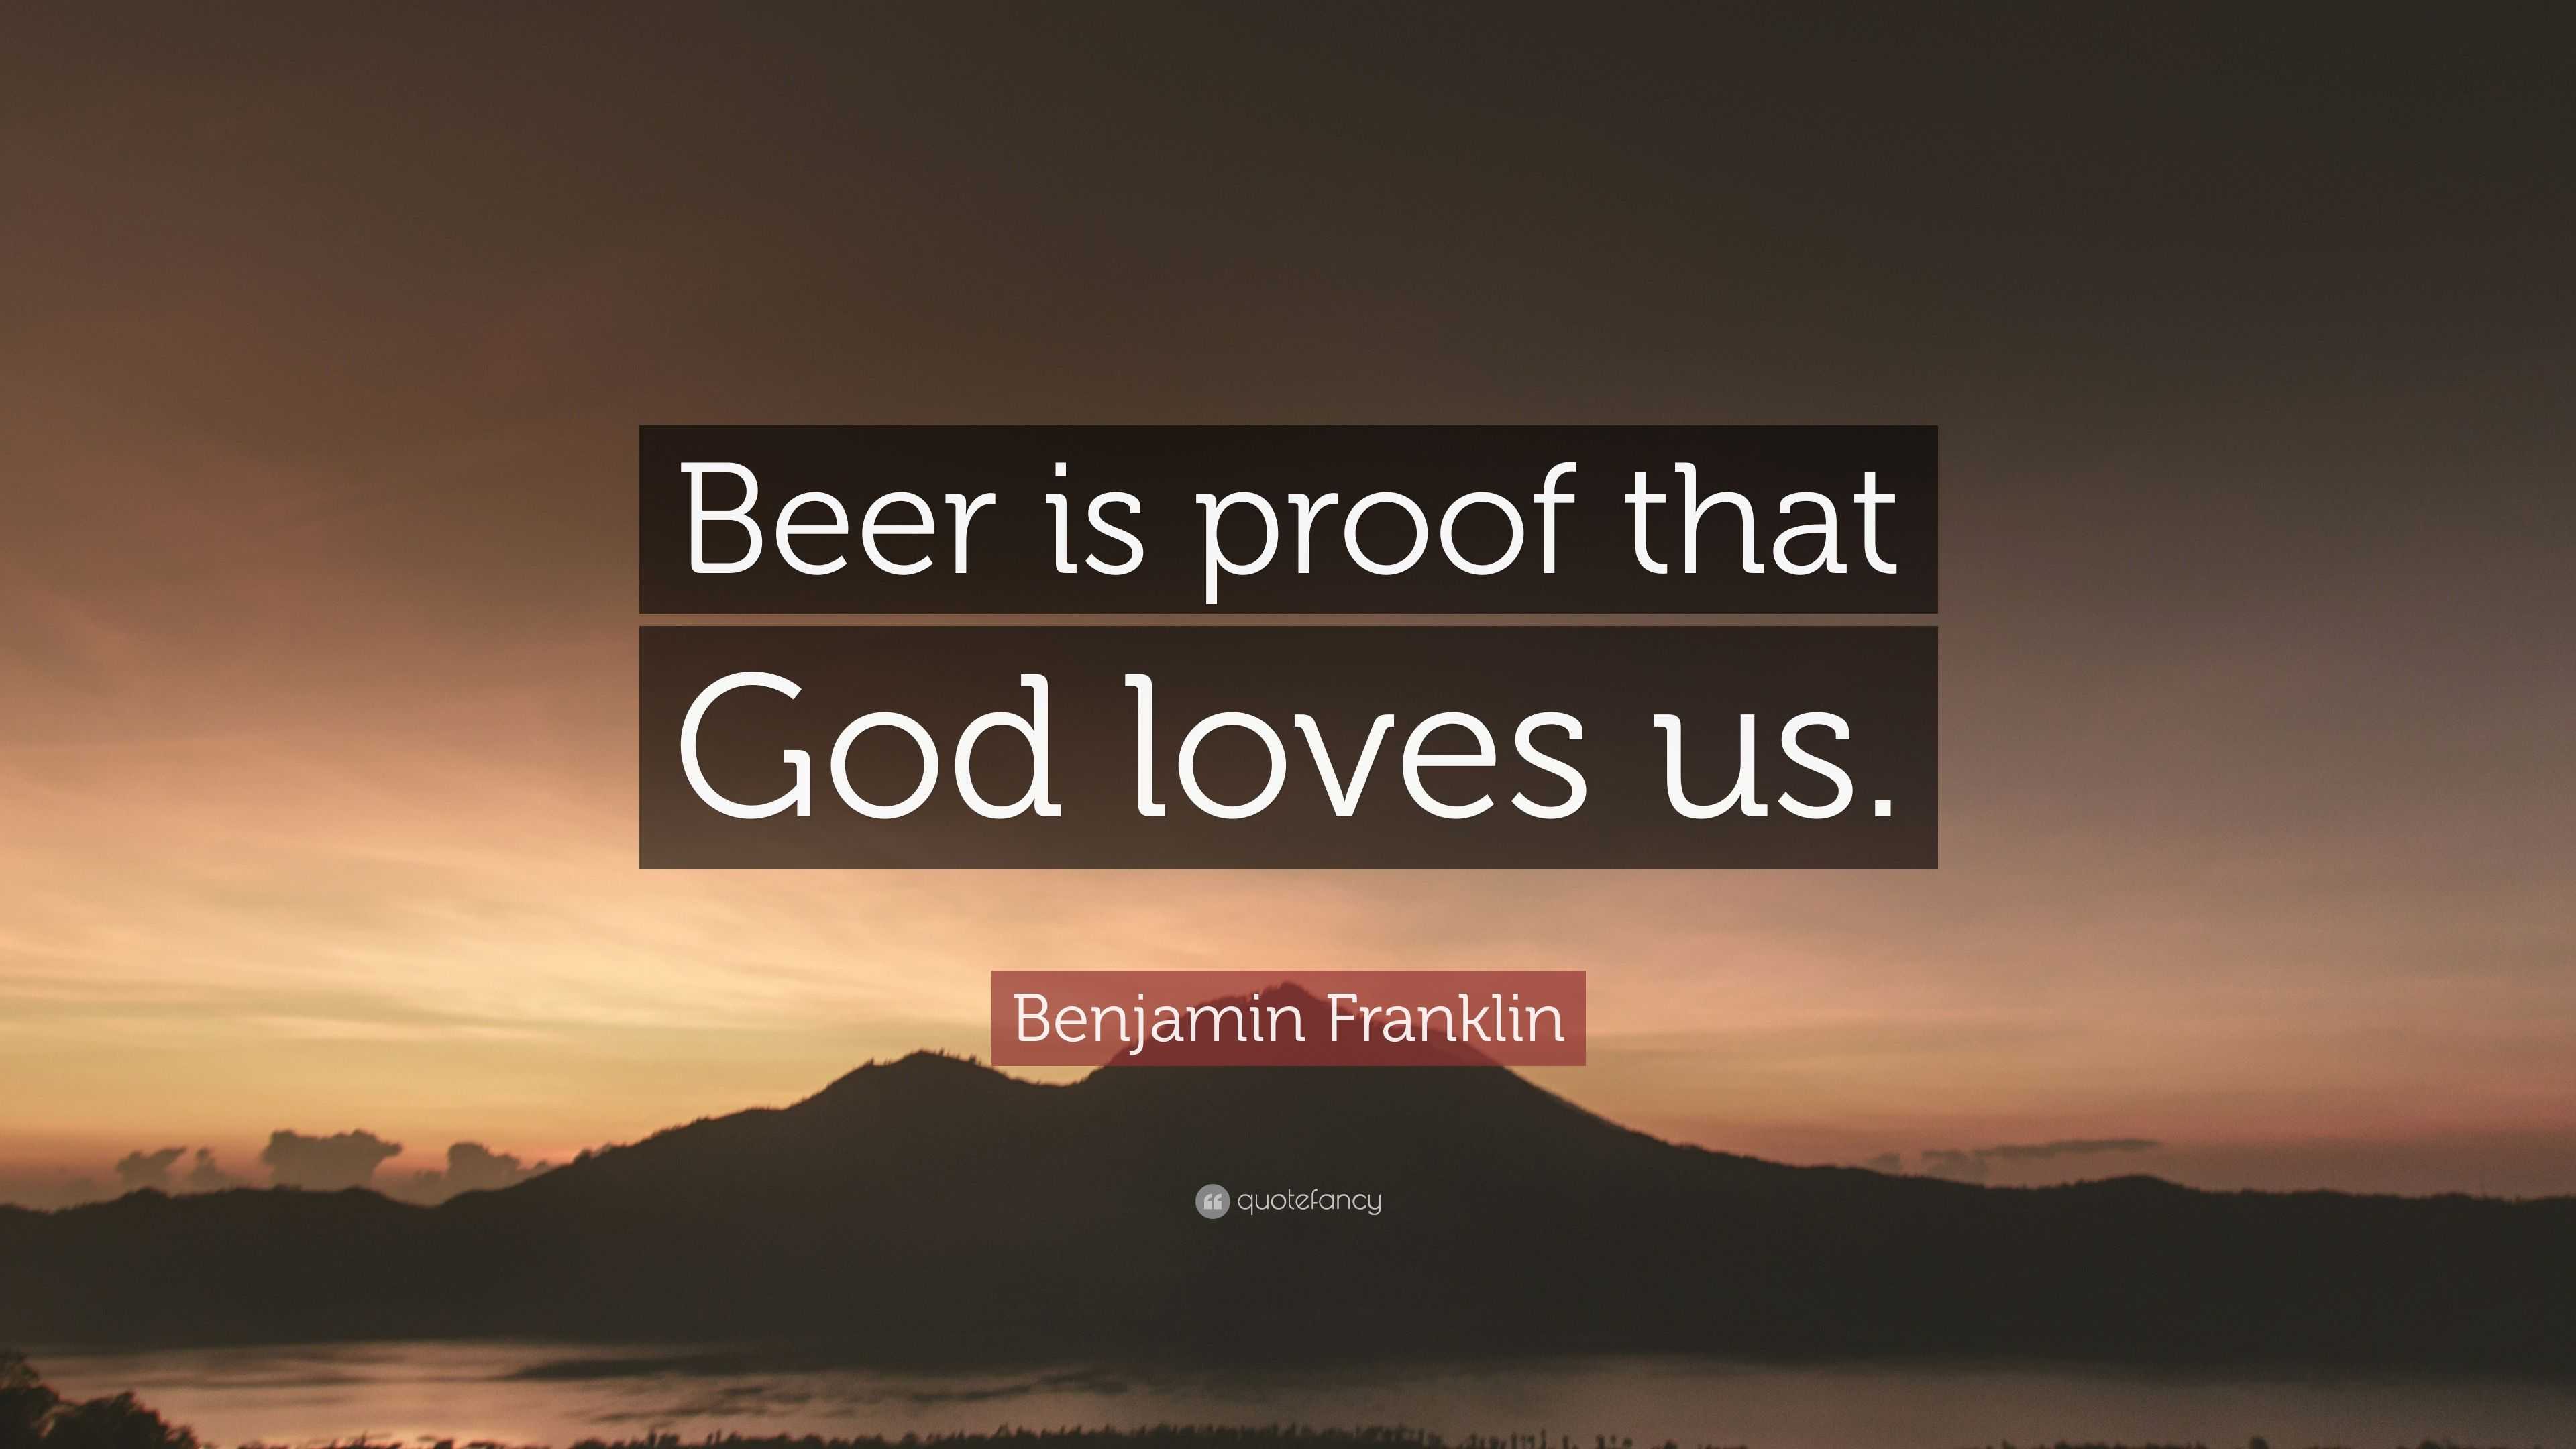 Benjamin Franklin Quote “Beer is proof that God loves us ”